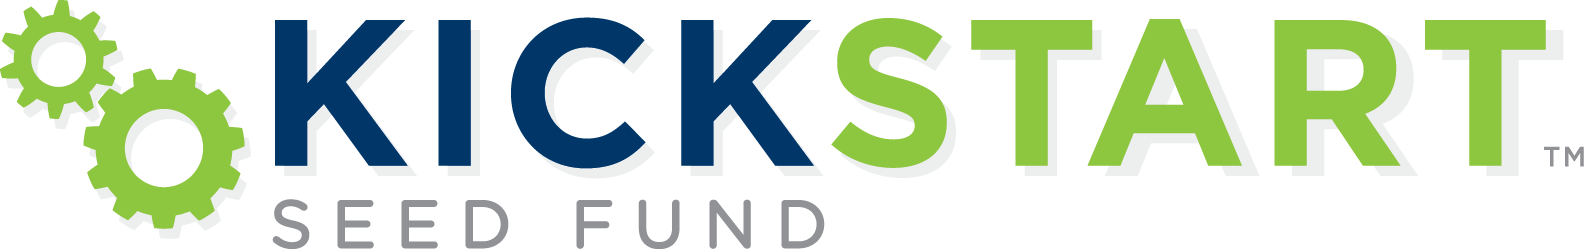 Kickstart Seed Fund